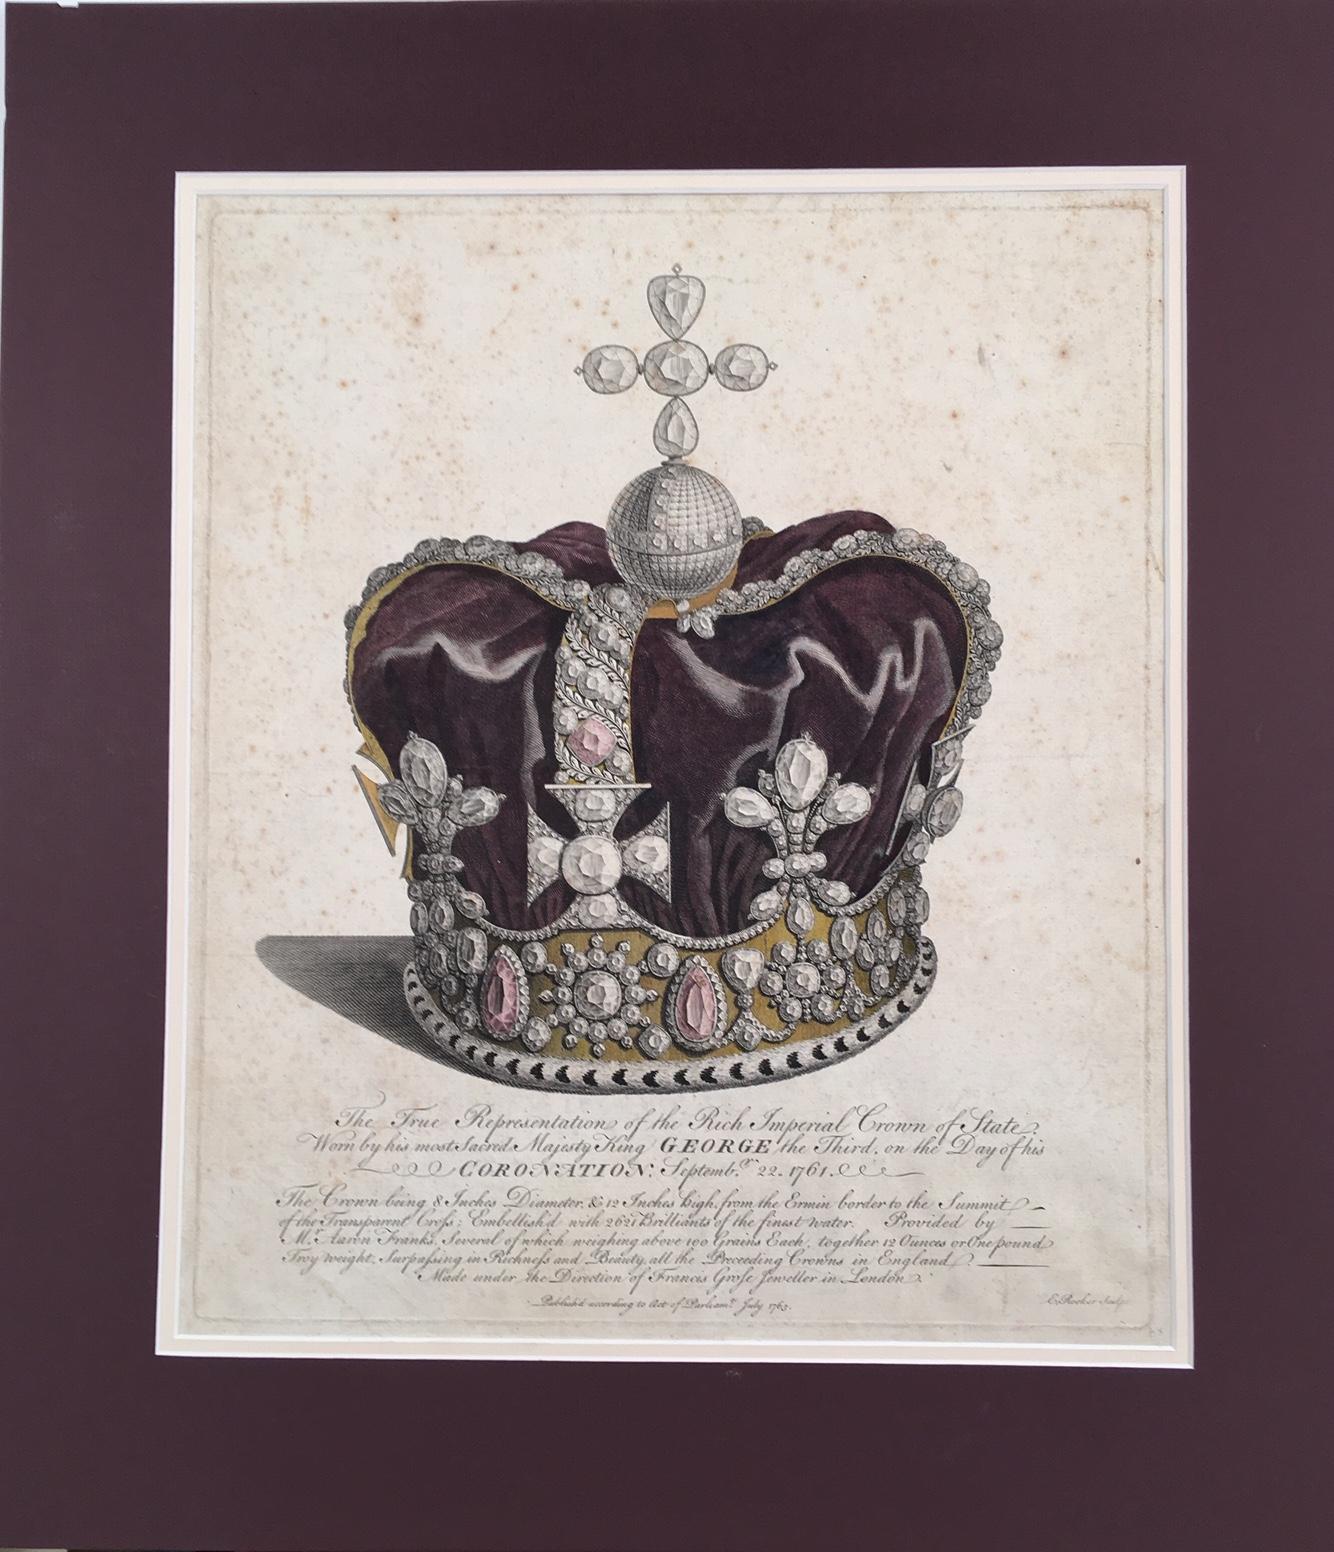 Edward Rooker (aka E. Rooker) Portrait Print - Imperial Crown of King George III